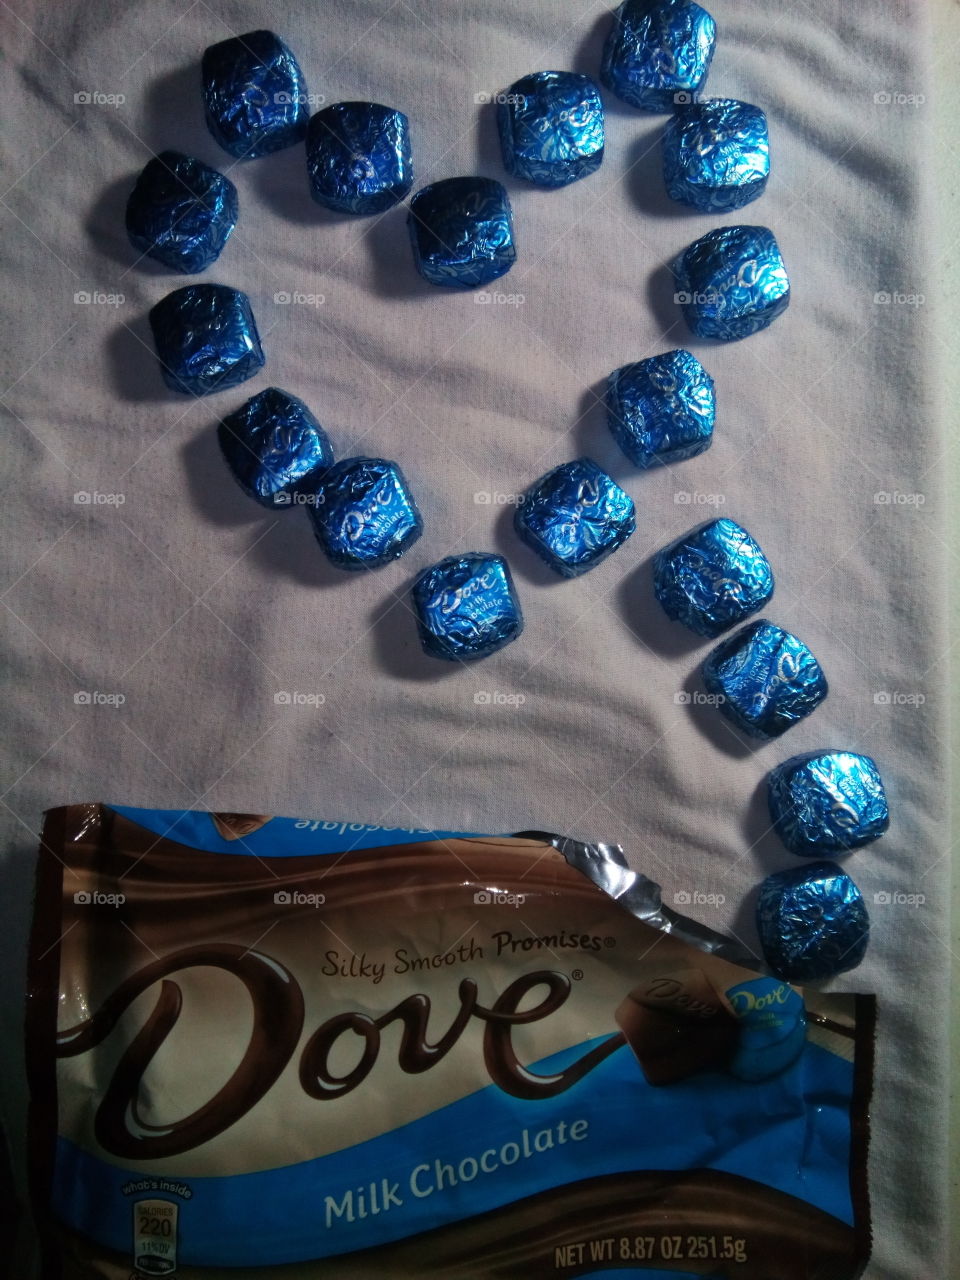 I Love Dove Chocolate